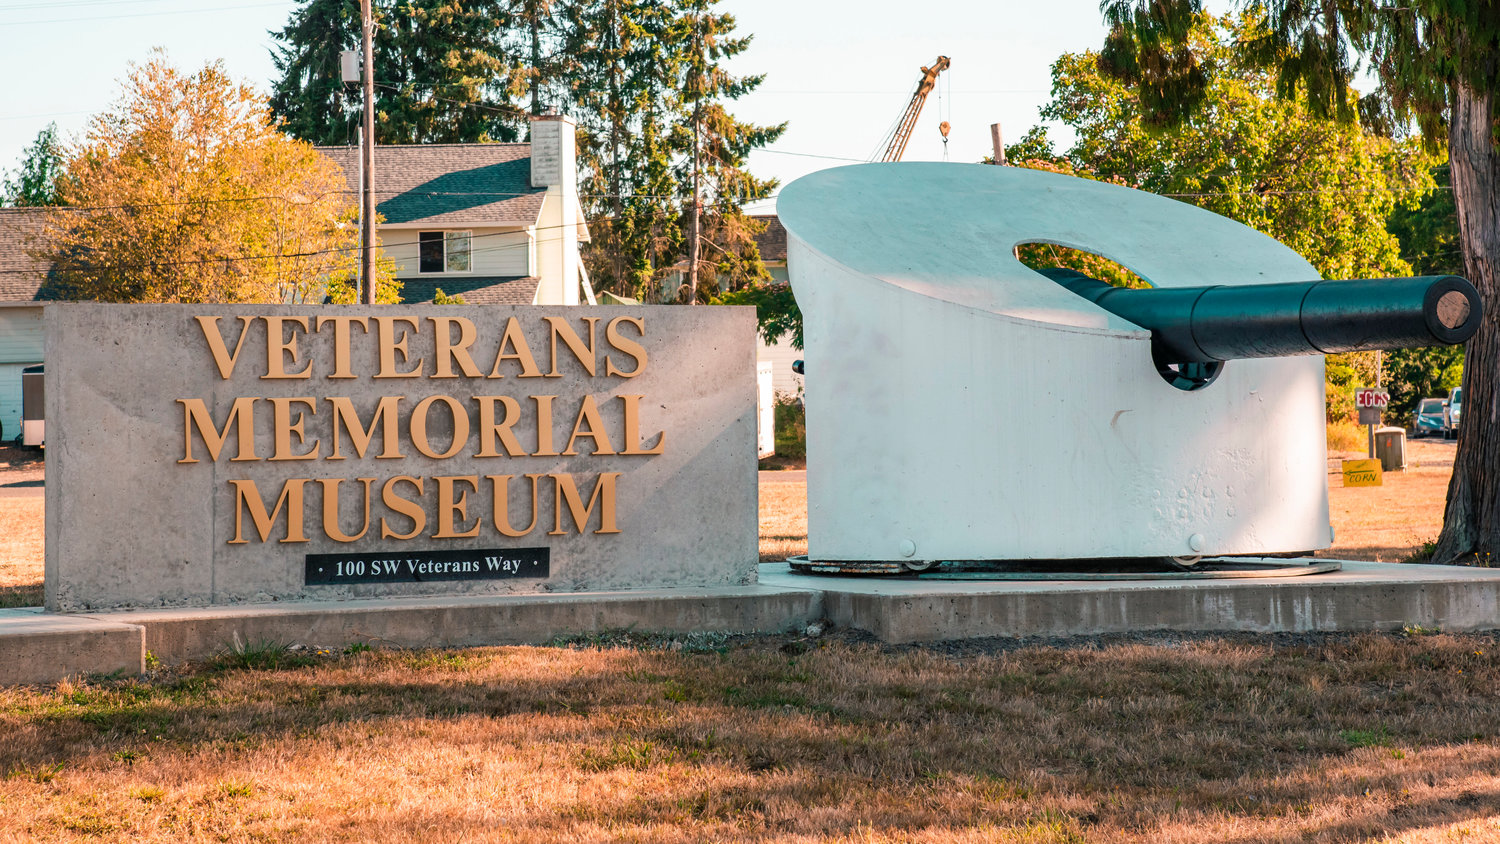 The Veterans Memorial Museum is located at 100 SW Veterans Way in Chehalis.